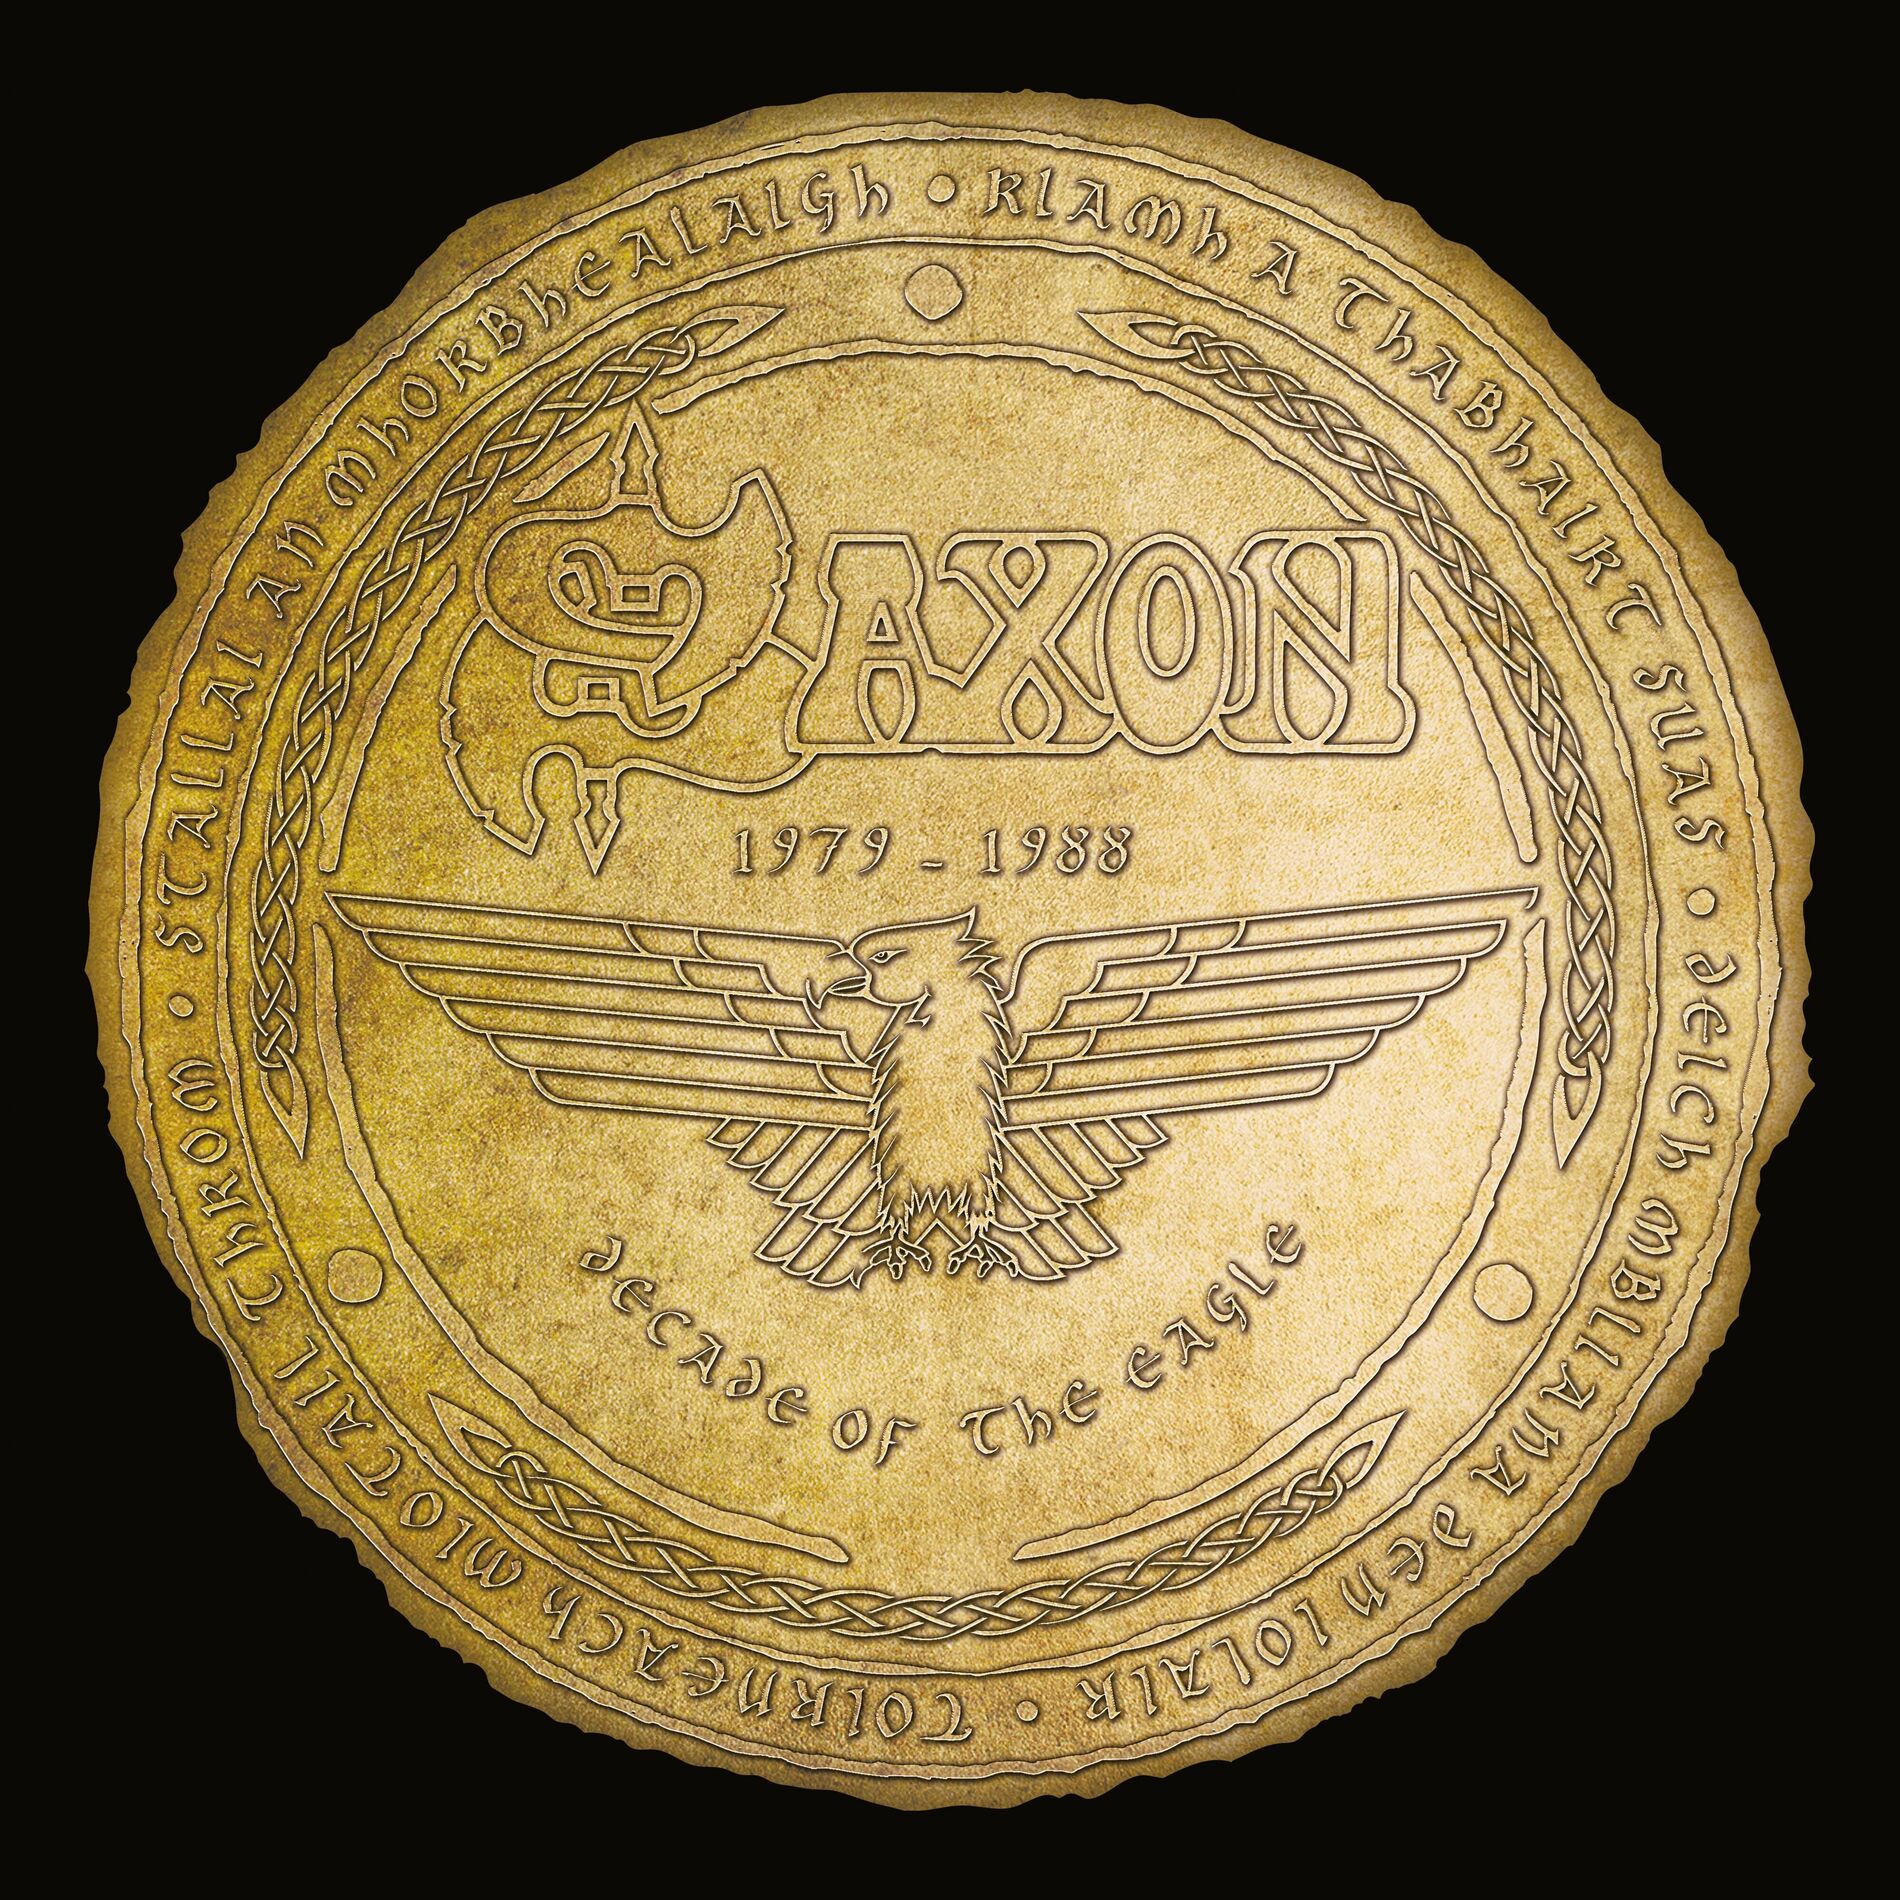 Saxon - The Complete Albums 1979-1988: lyrics and songs | Deezer